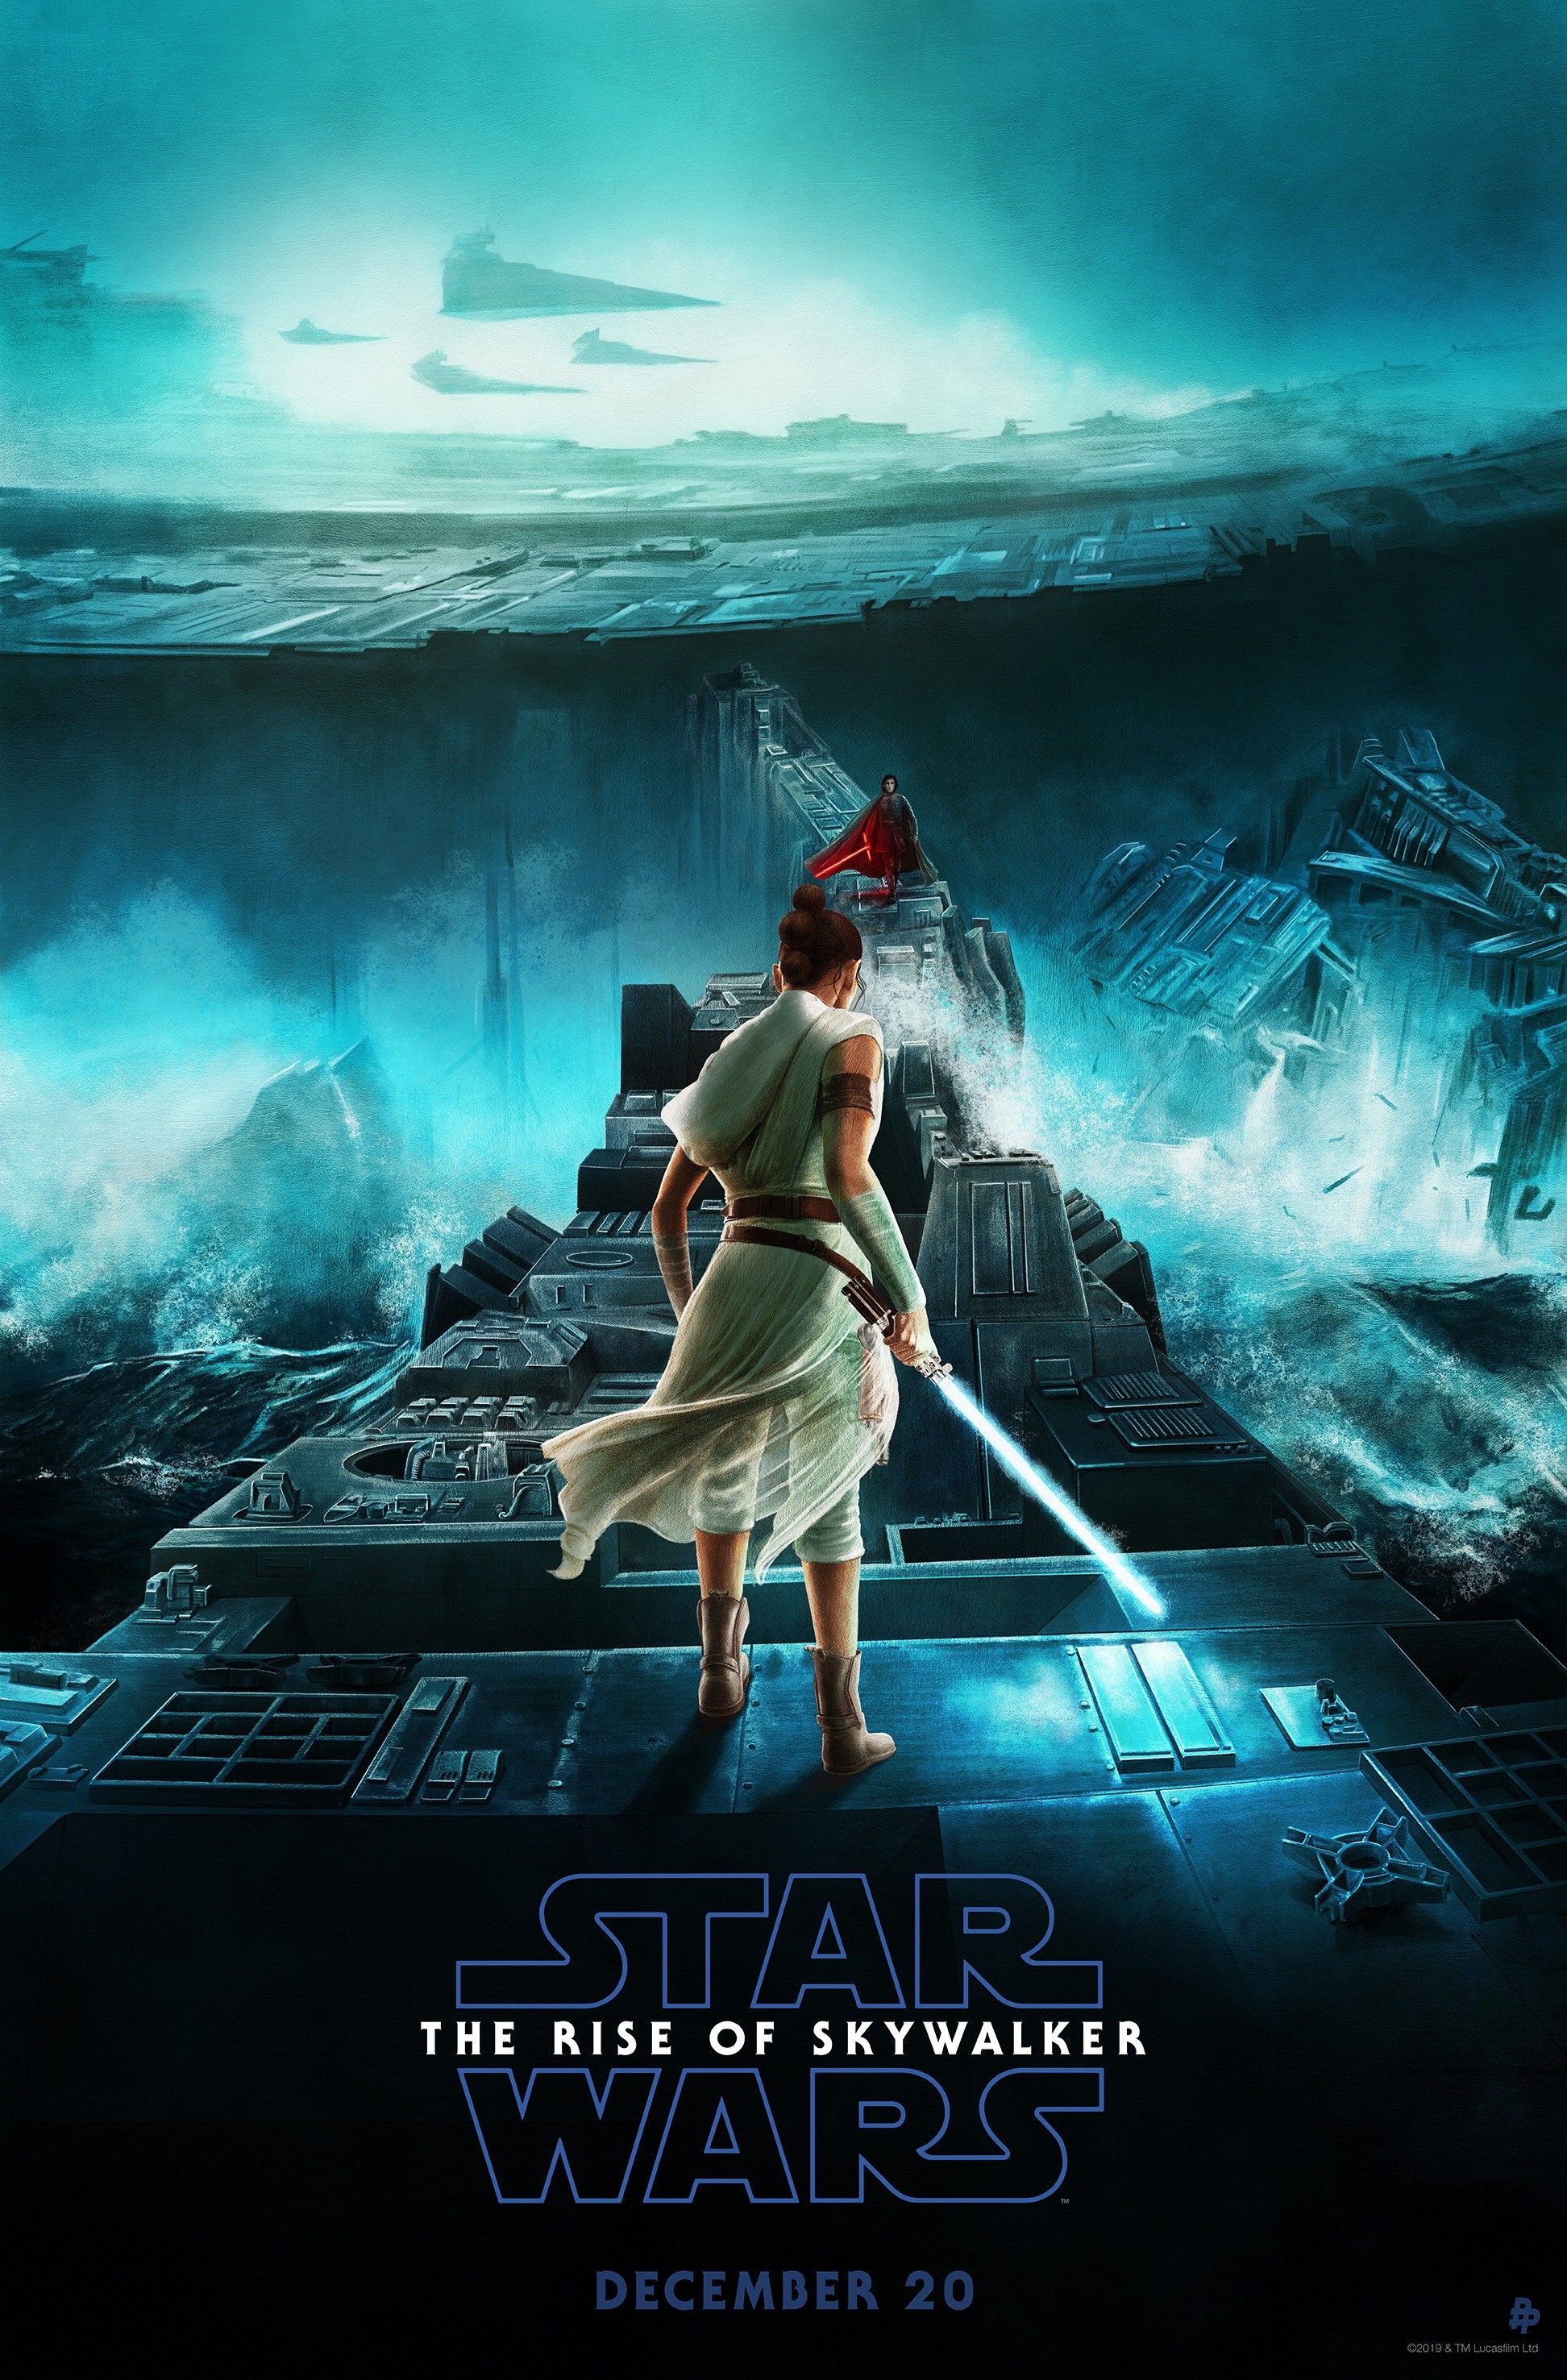 Rey & Kylo Ren Prepare For Battle In New Rise of Skywalker Poster & TV Spot